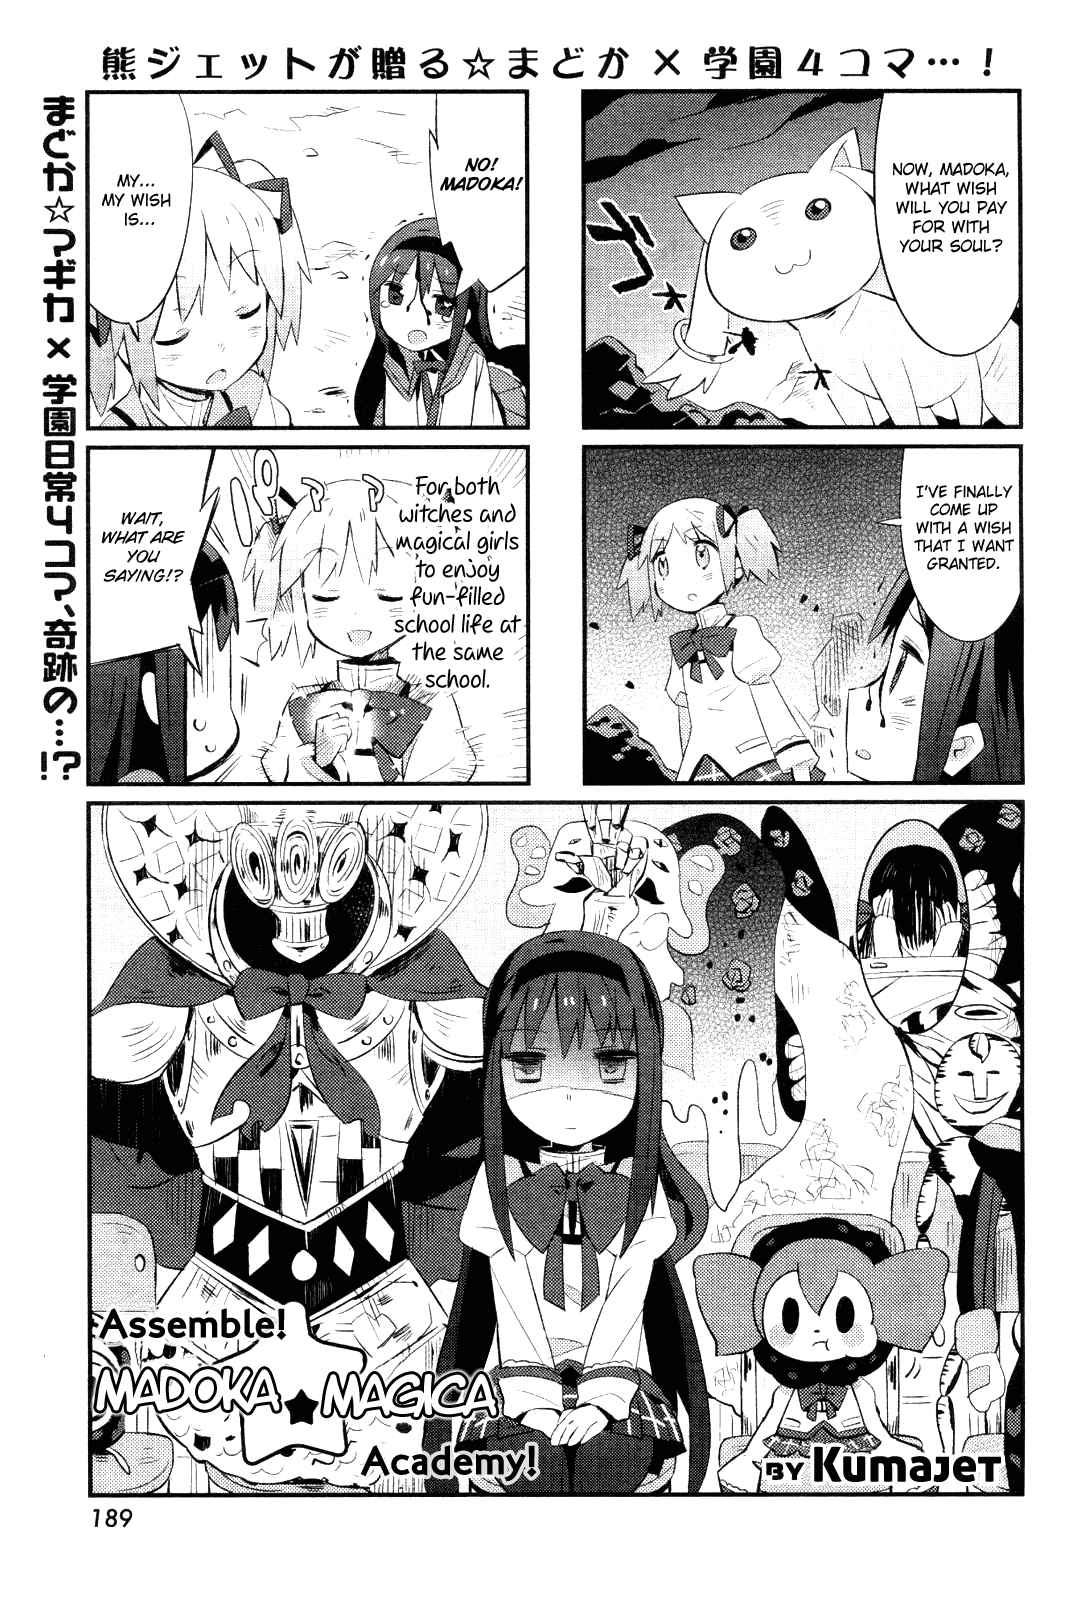 Manga Time Kirara★Magica Vol. 1 Ch. 14 "Assemble! Madoka☆Magica Academy!"